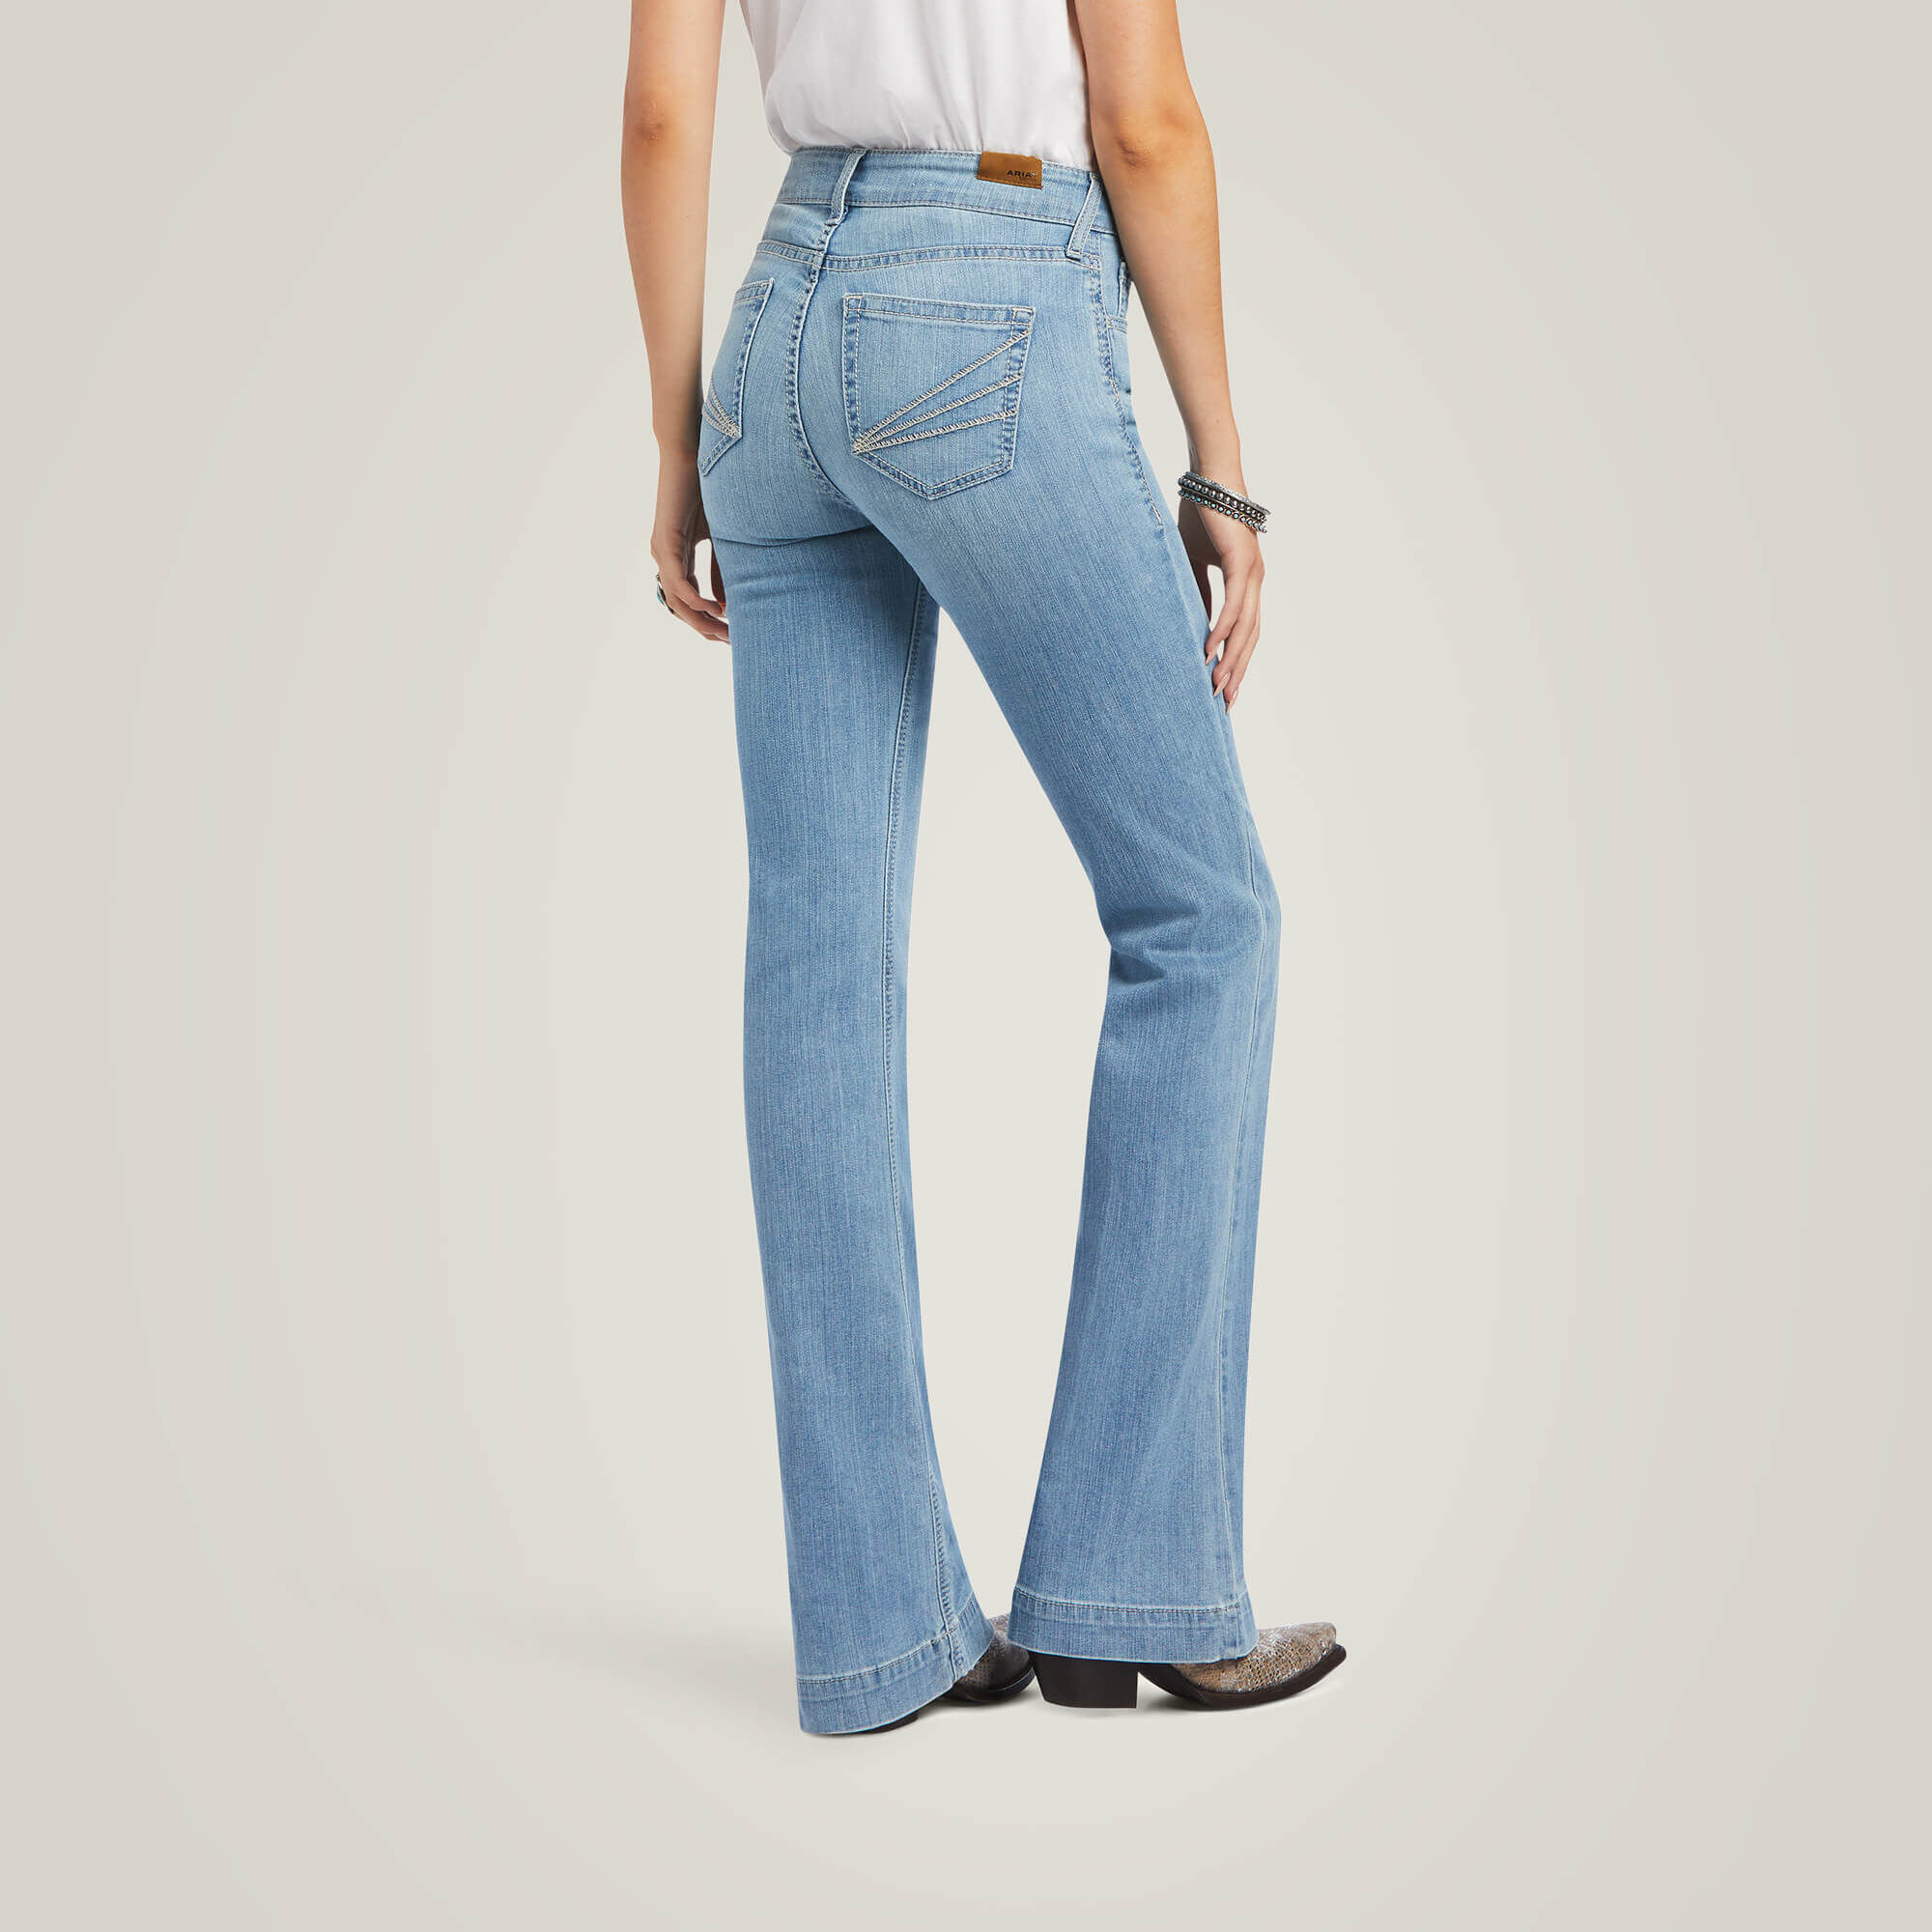 Women's Slim Trouser Aisha Wide Leg Jeans in Ohio, Size: 28 Regular by Ariat